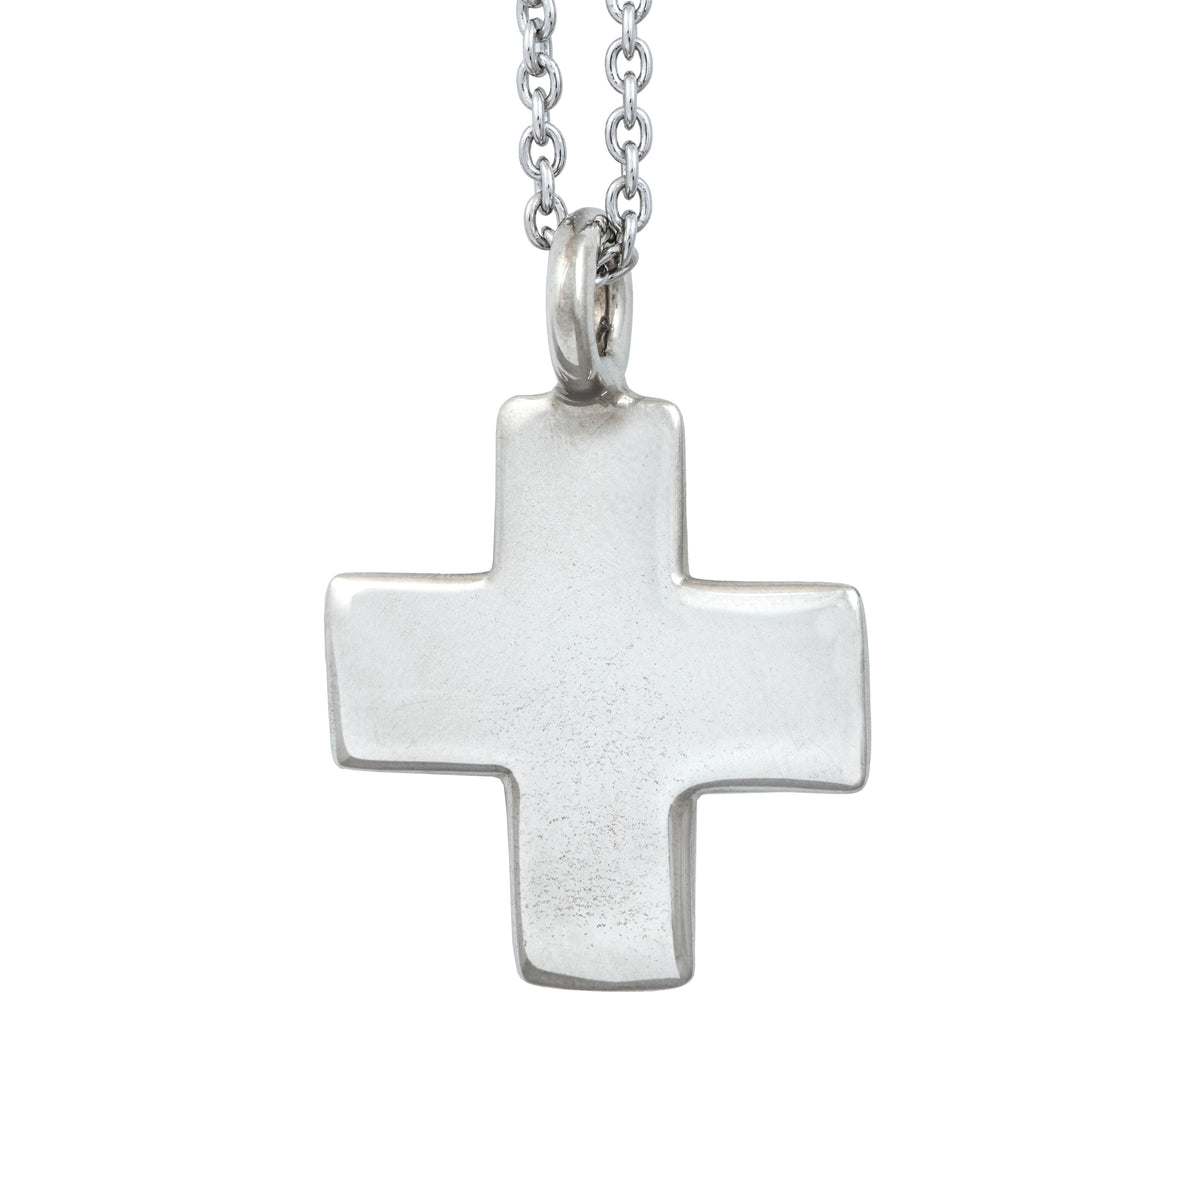 Silver cross pendant with silver cable chain. Cristina Tamames Jewelry Designer